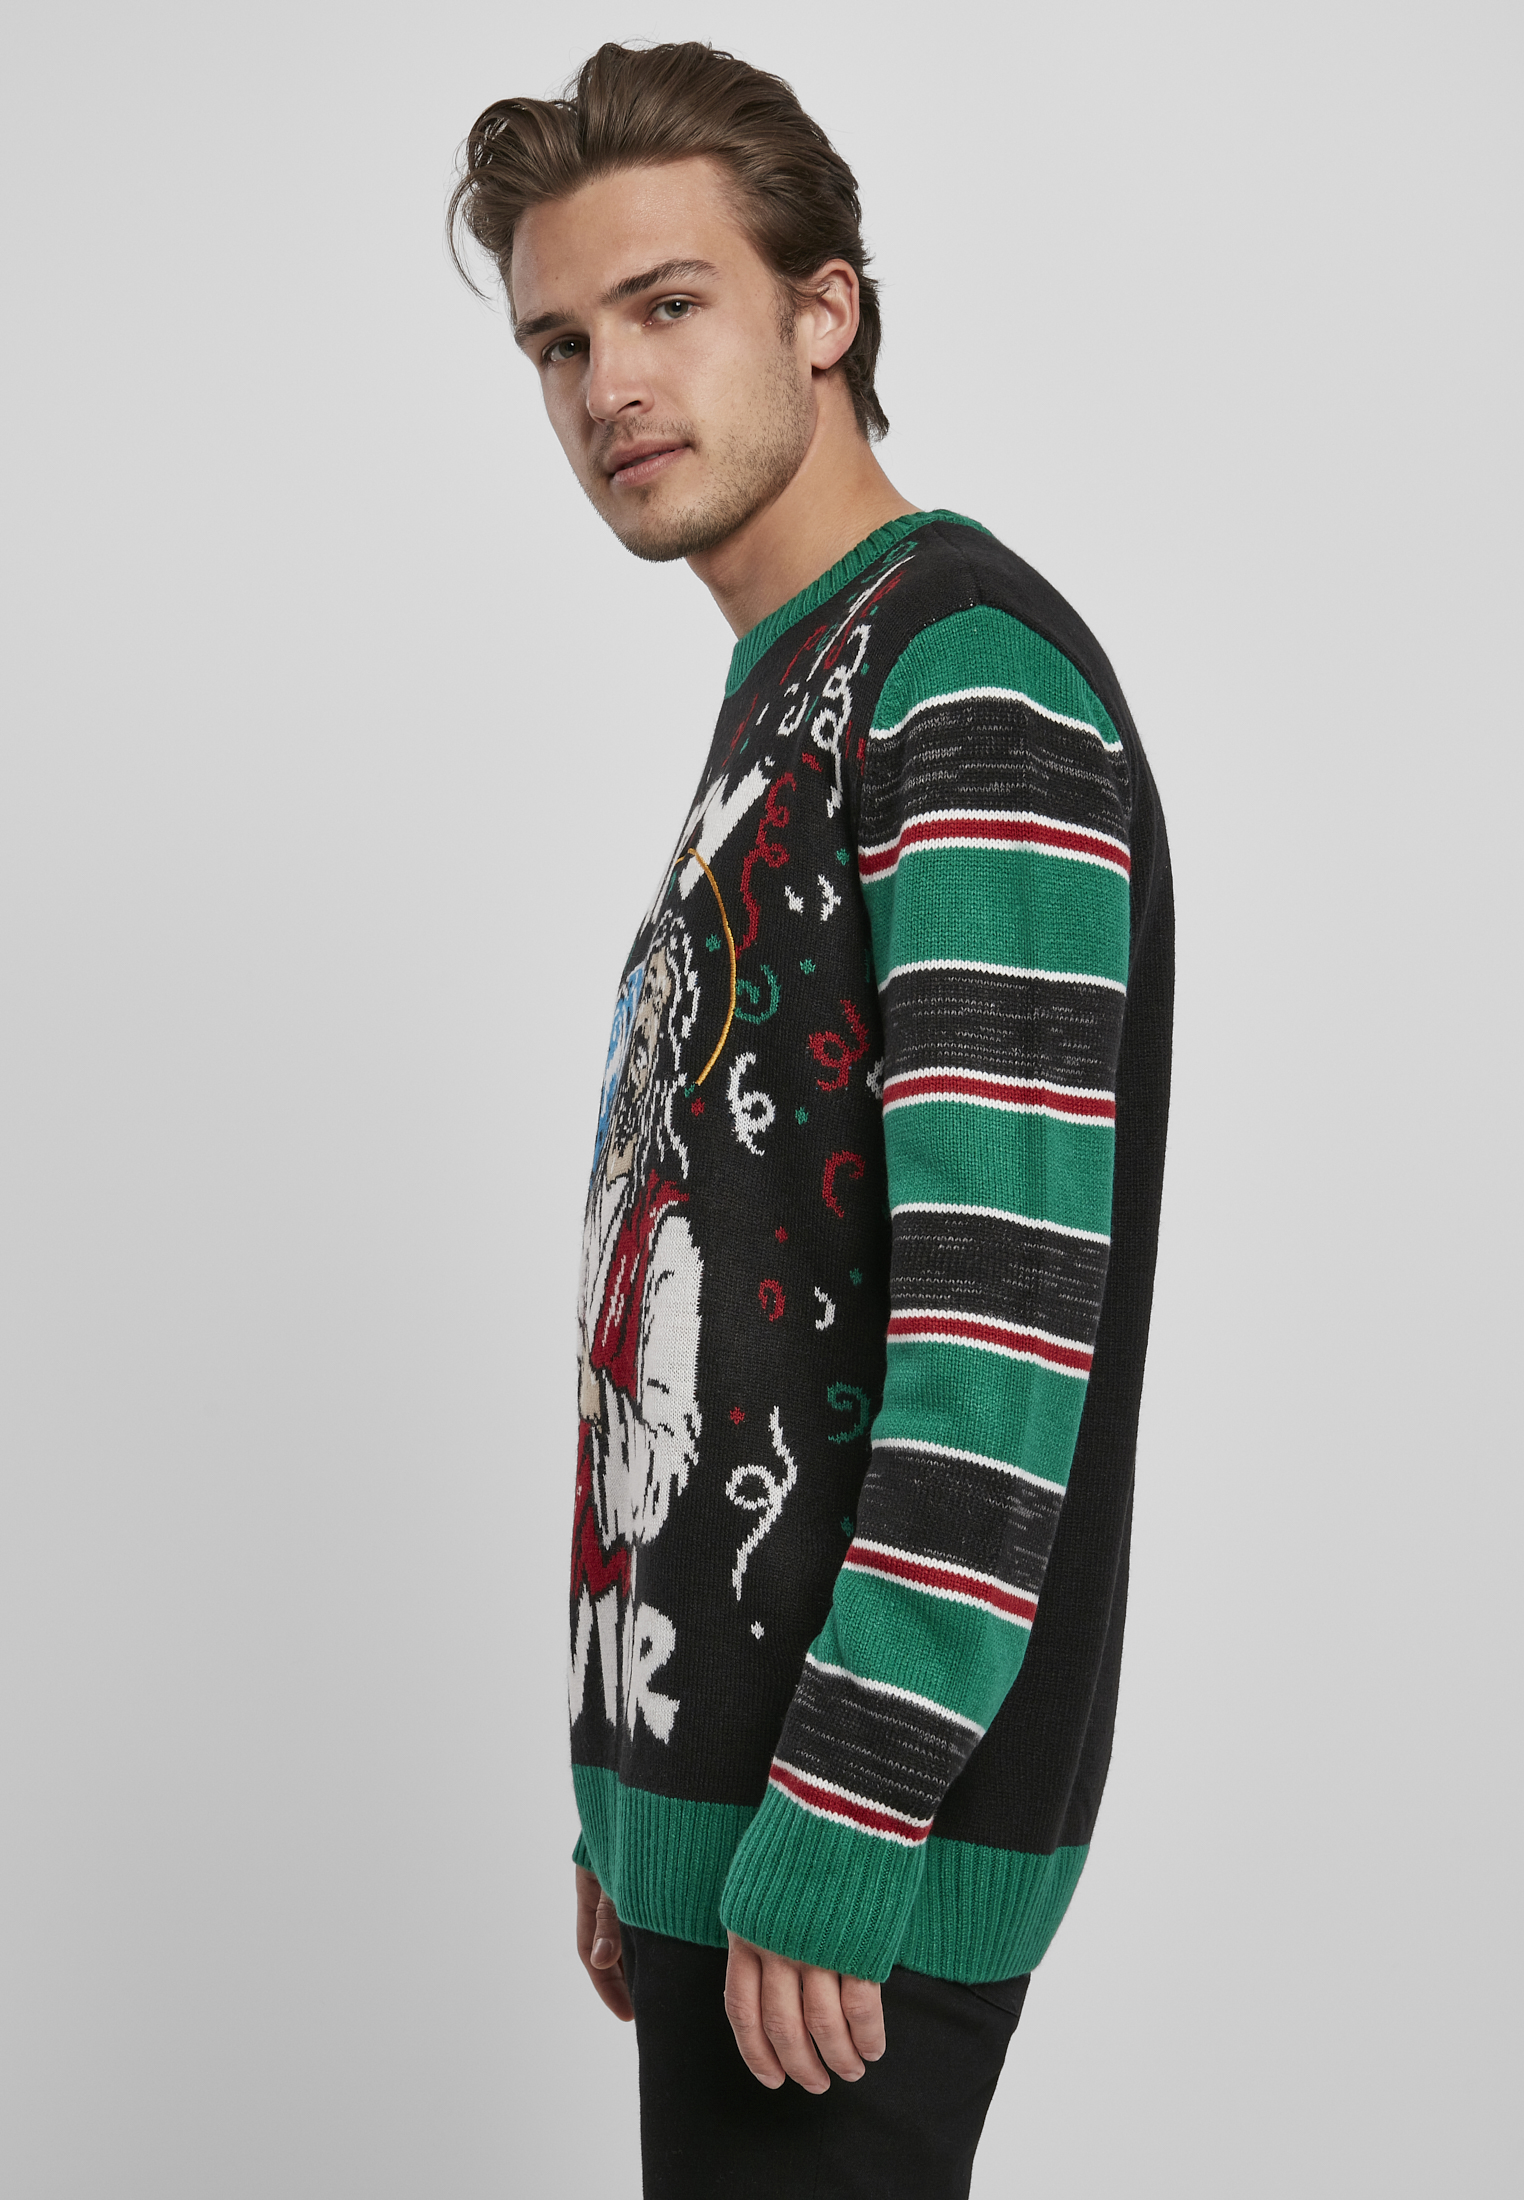 Crewnecks Savior Christmas Sweater in Farbe black/x-masgreen